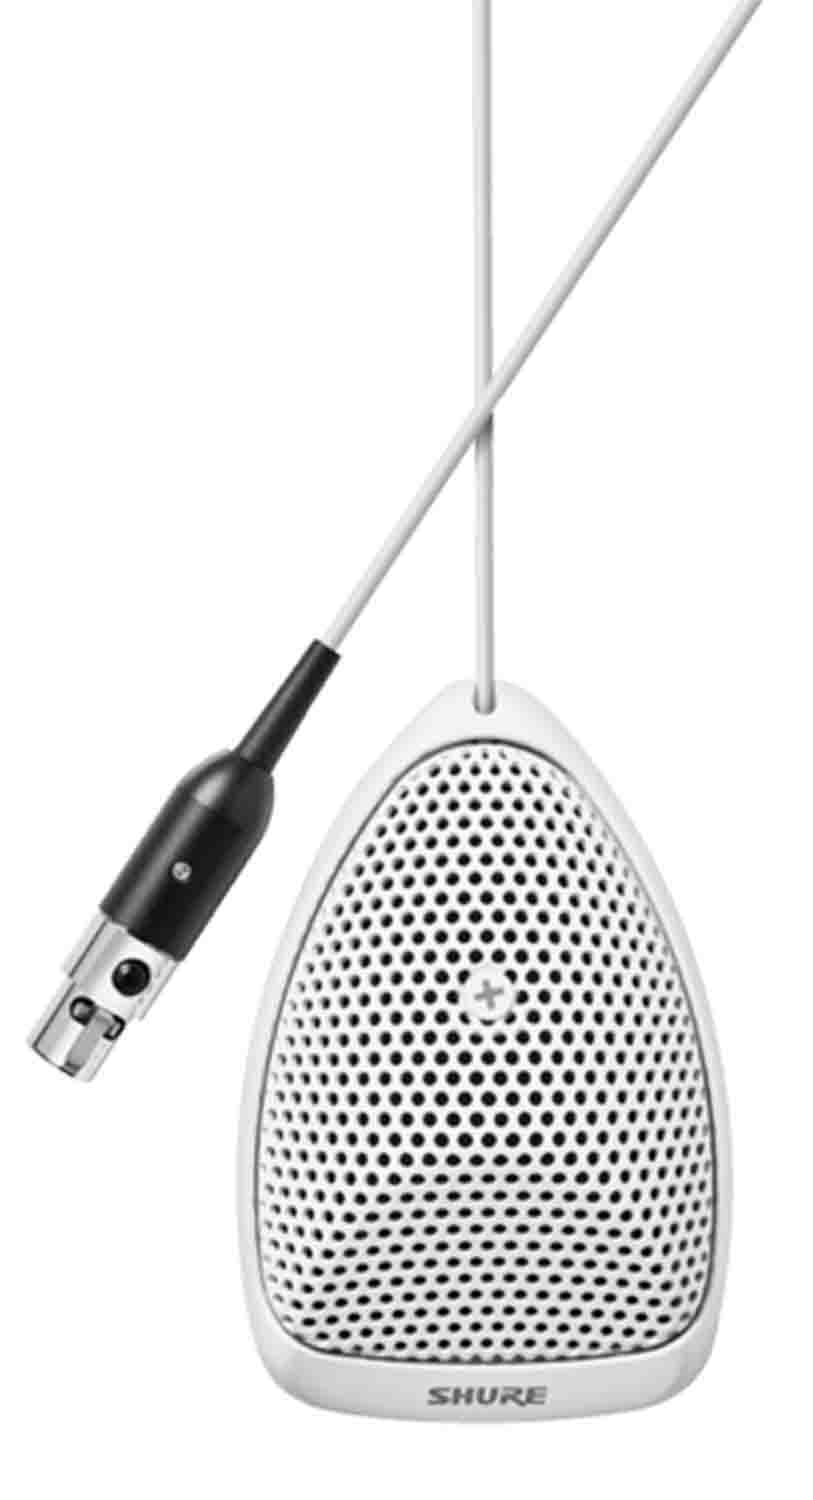 Shure MX391W-A Microflex Boundary Microphone - White - Hollywood DJ